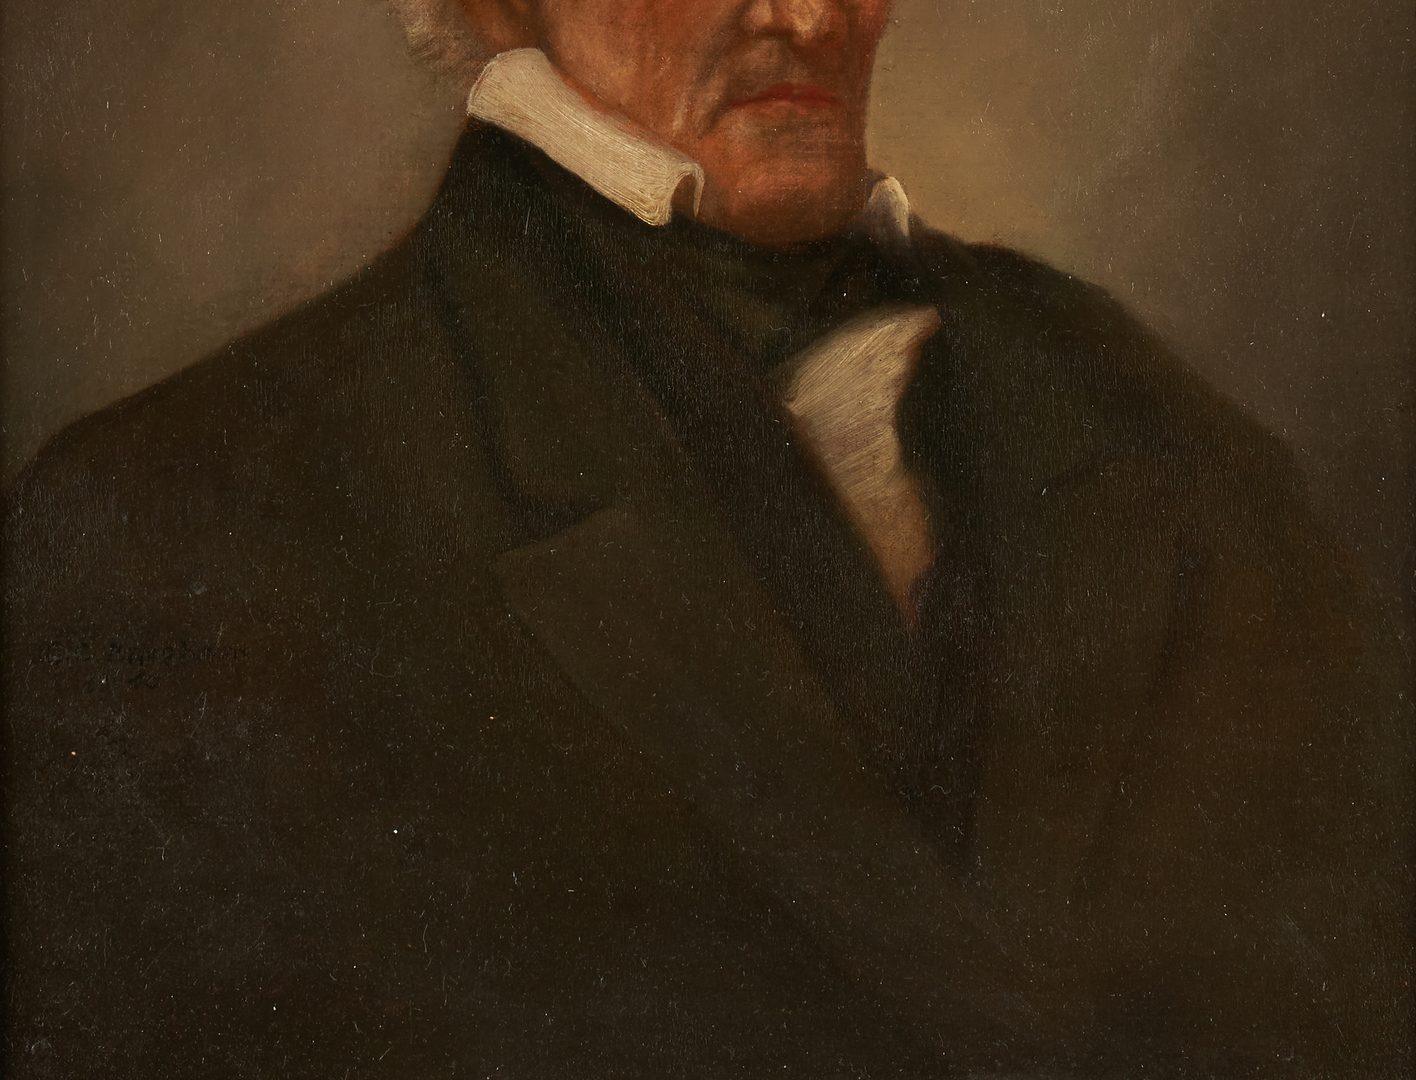 Lot 598: 19th century Portrait of Andrew Jackson